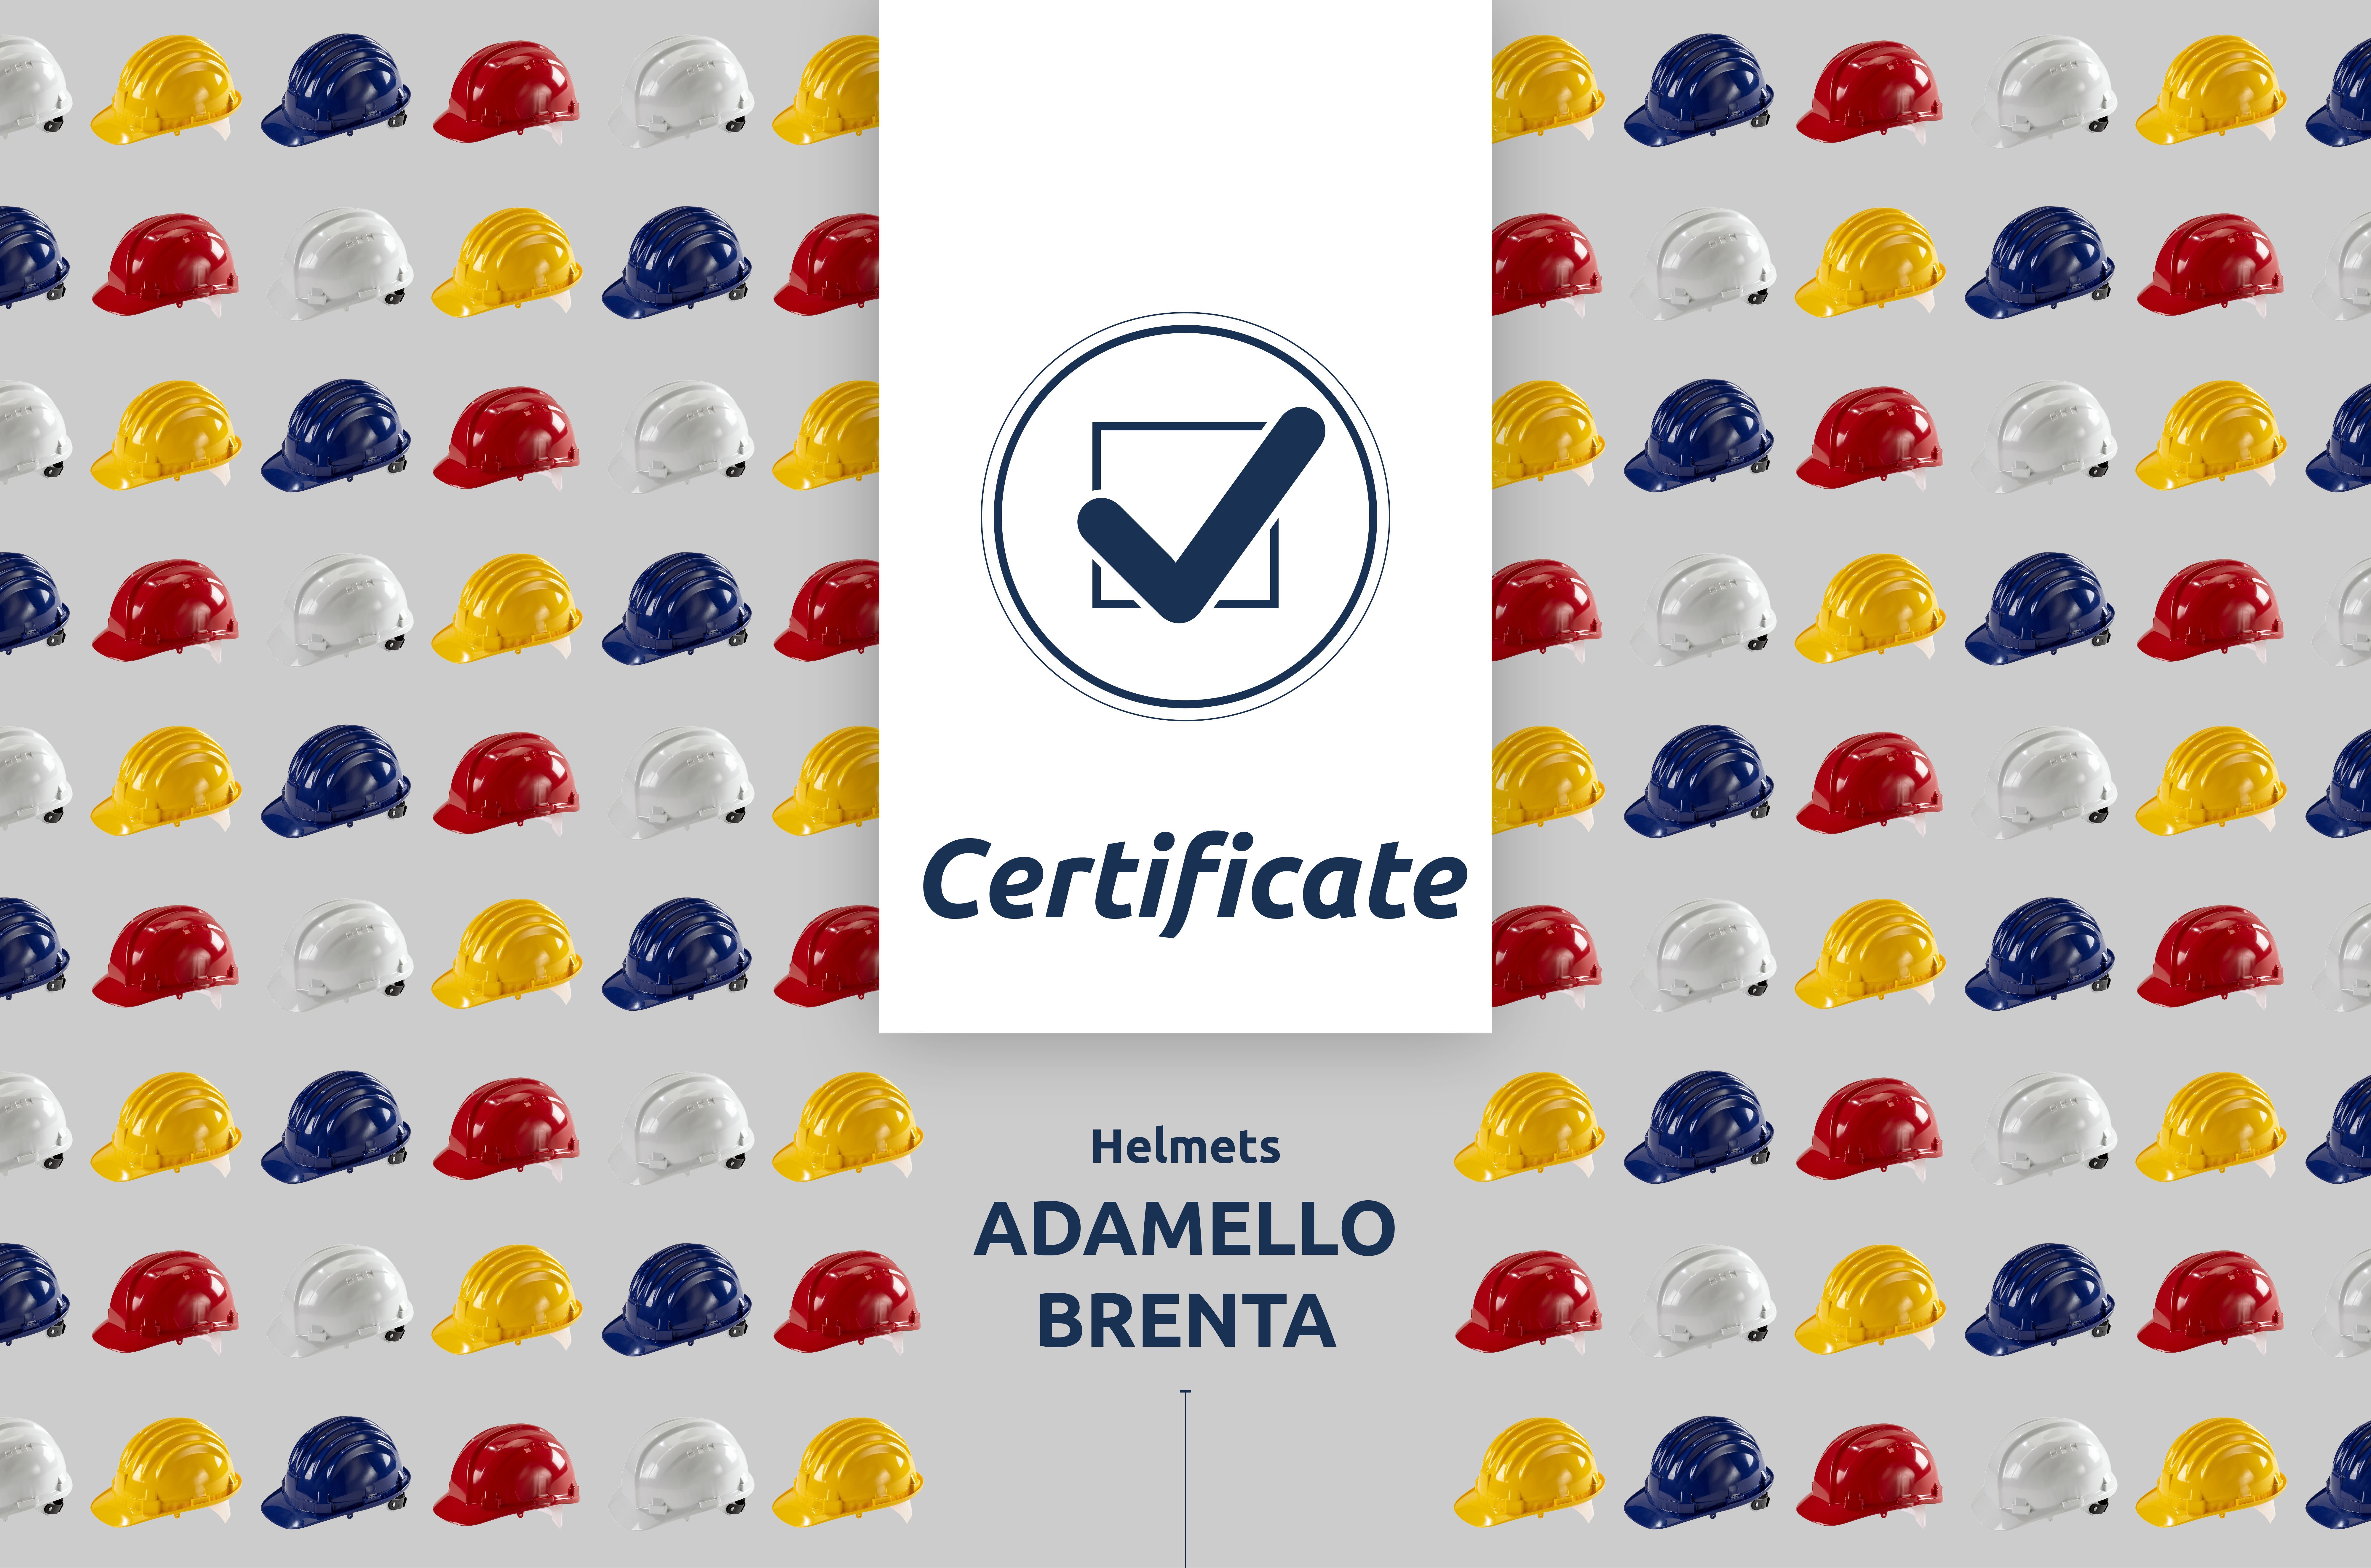 adamello-and-brenta-helmets-have-renewed-the-ce-uni-en-397-certifications